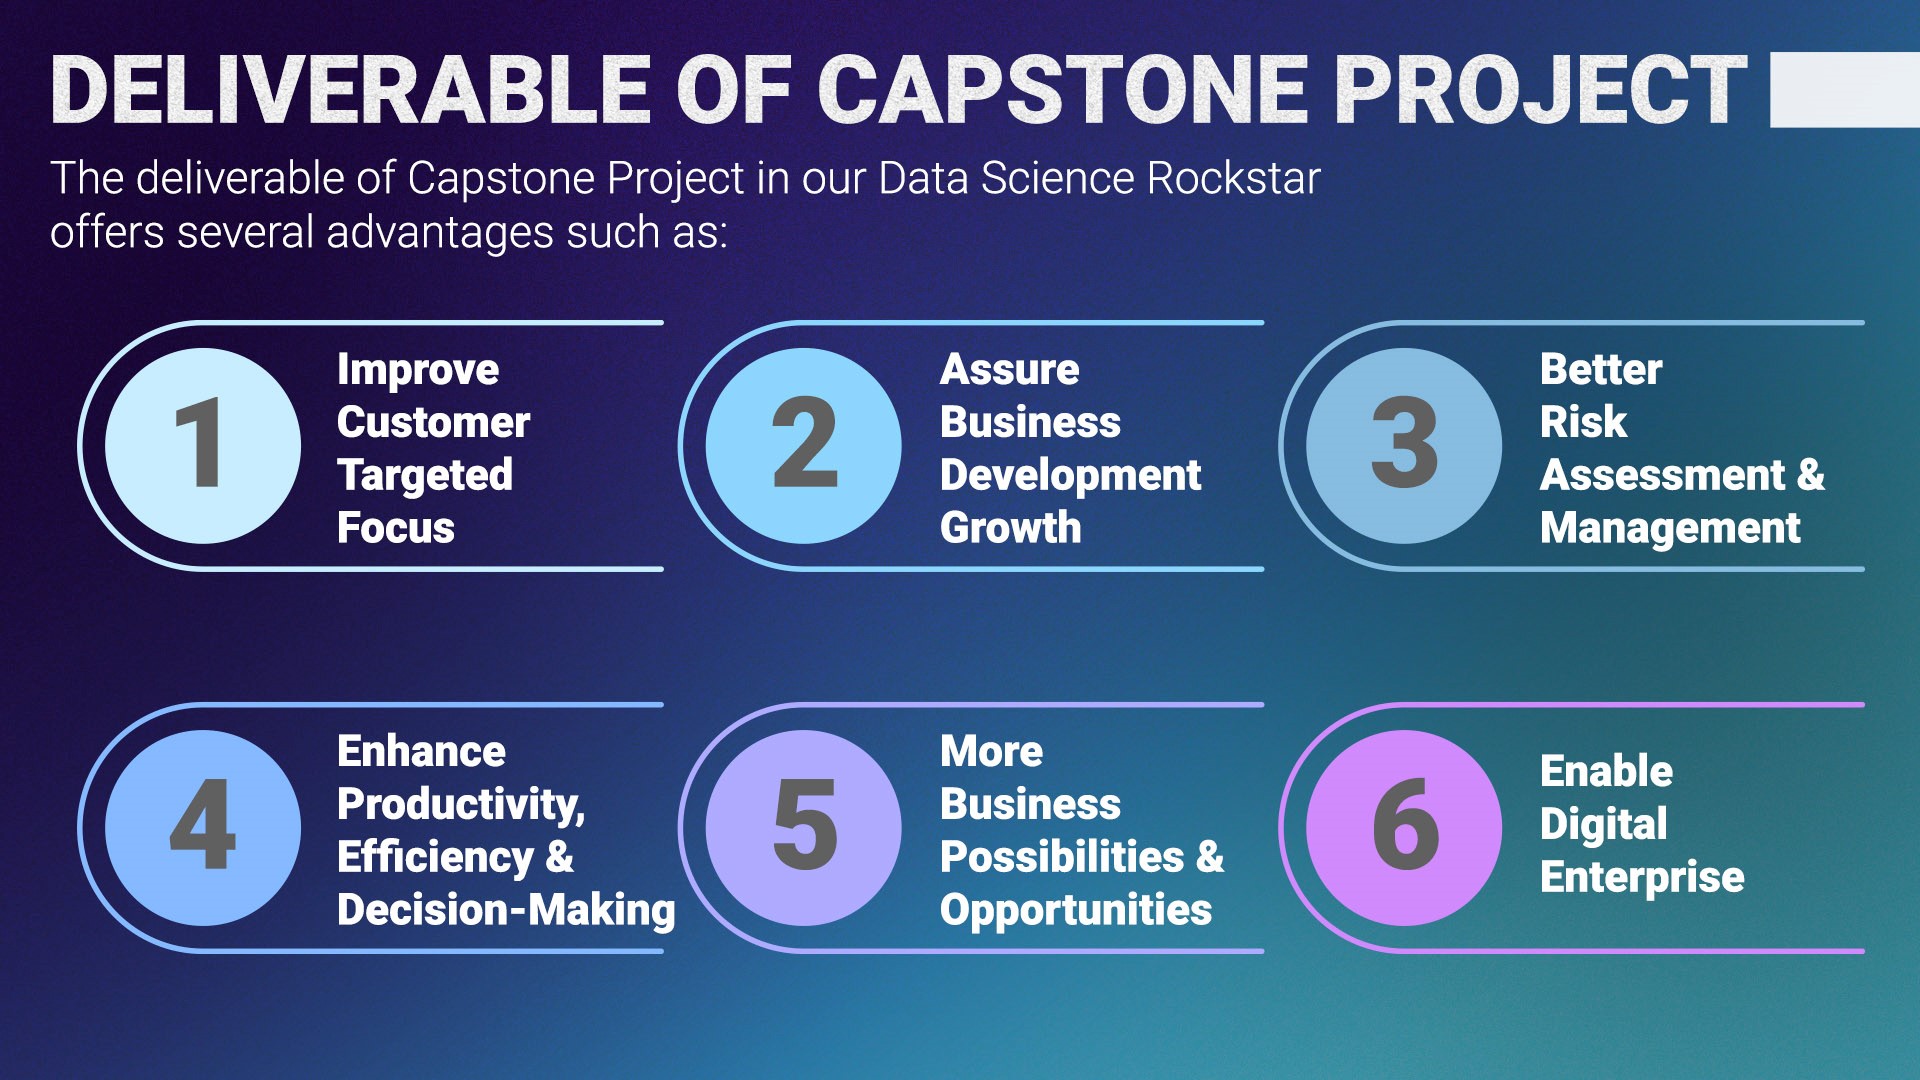 Capstone Project Data Science, DSR, Data Science Rockstar